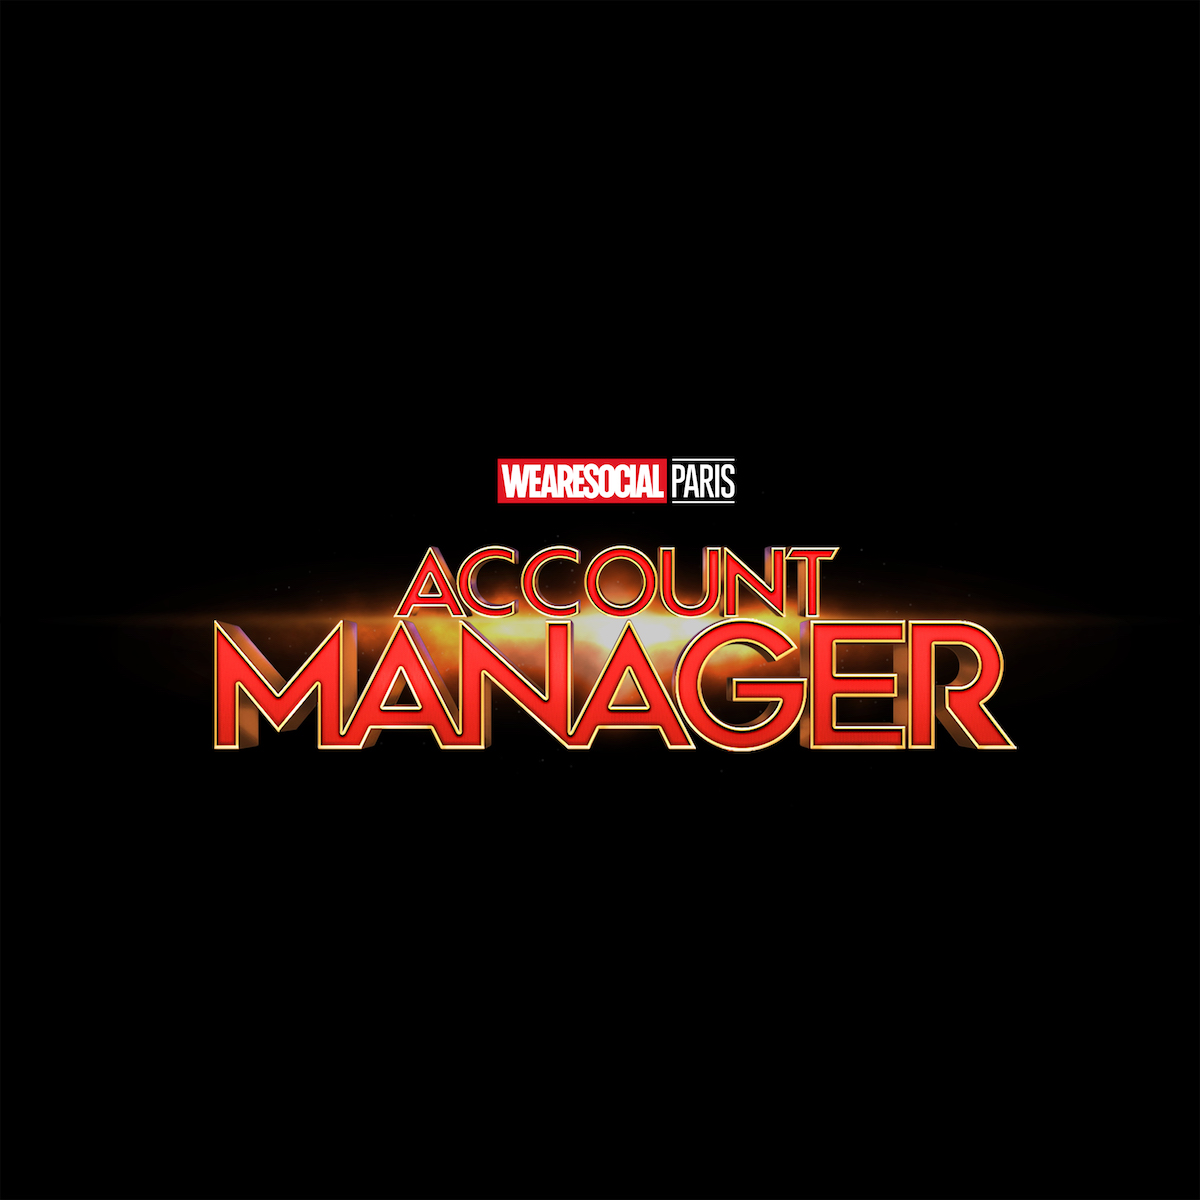 Superhero Logos for creative agency job titles - Account Manager / Captain Marvel